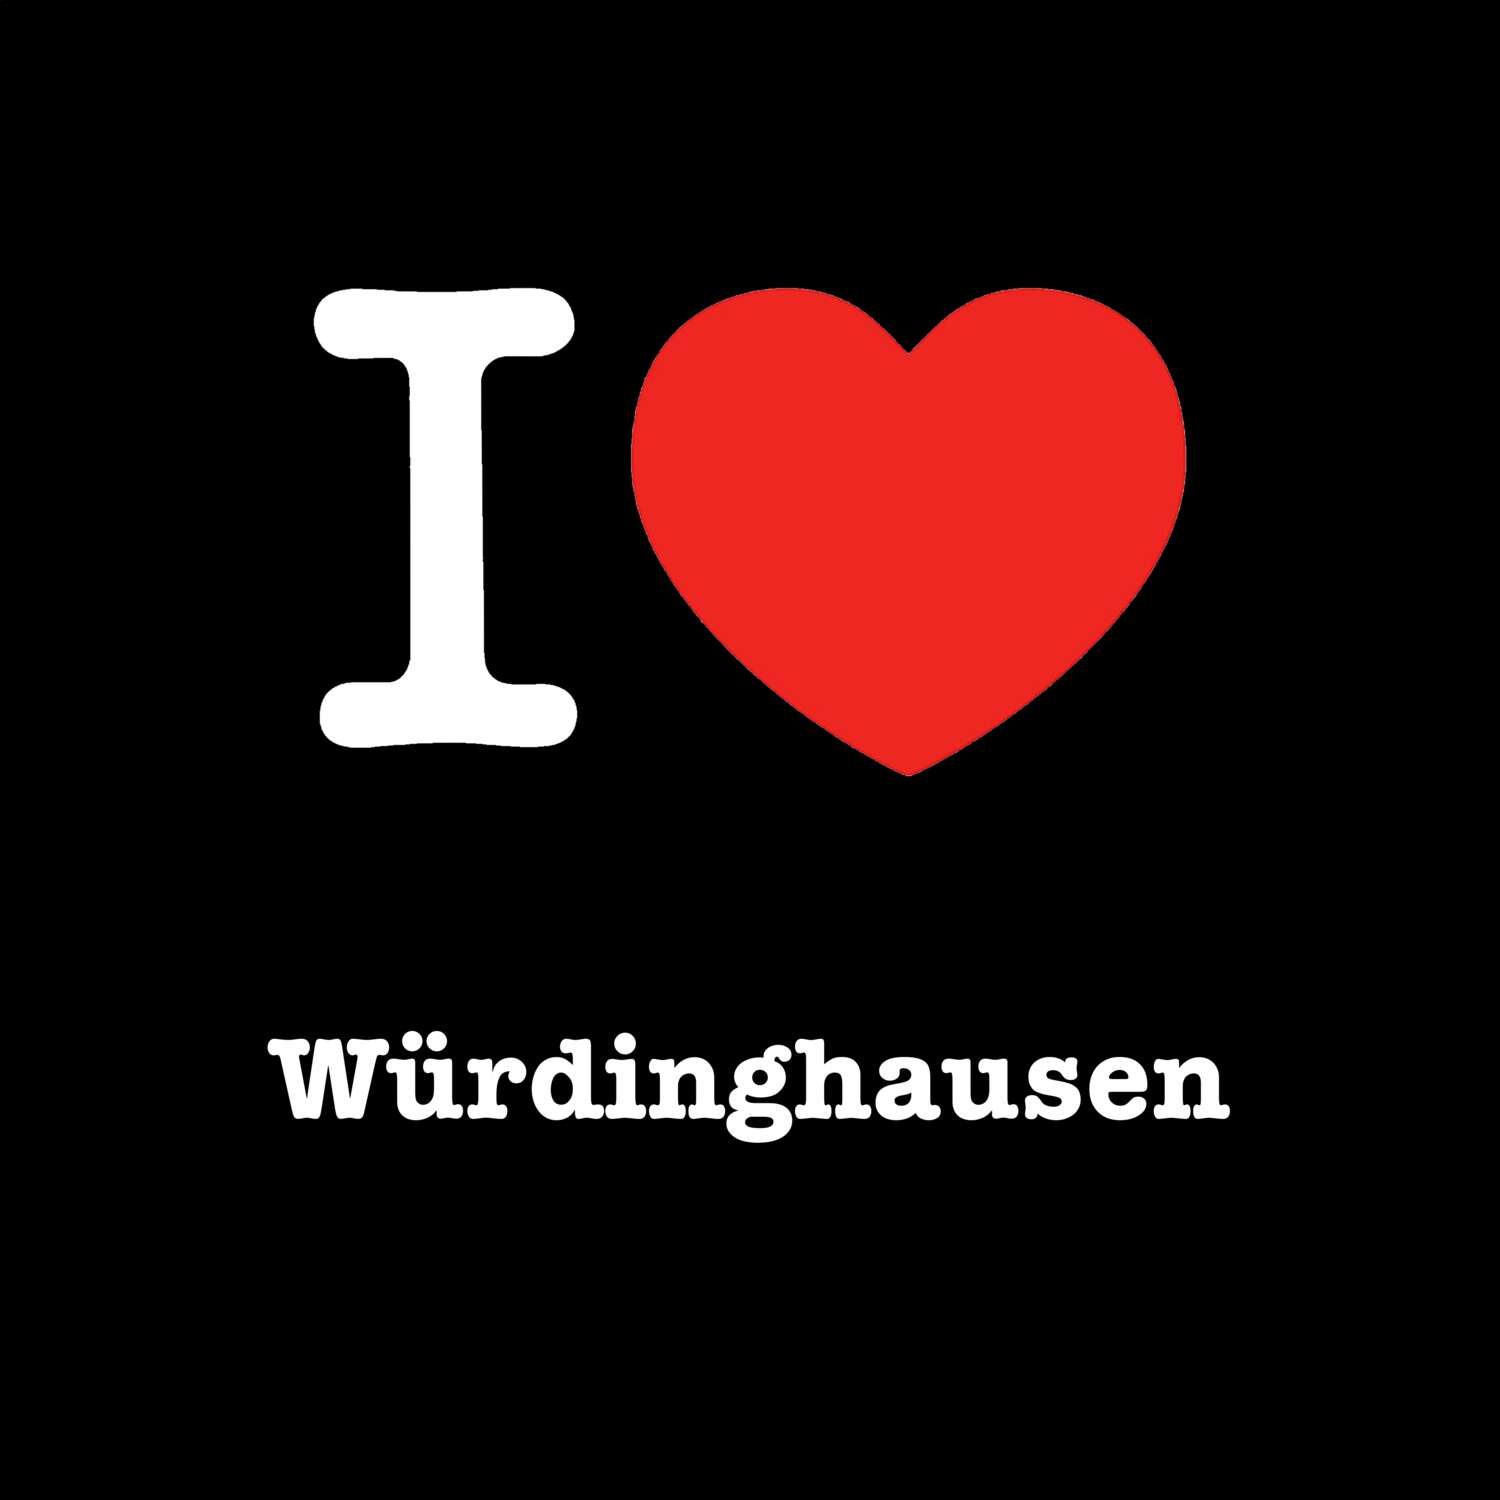 Würdinghausen T-Shirt »I love«